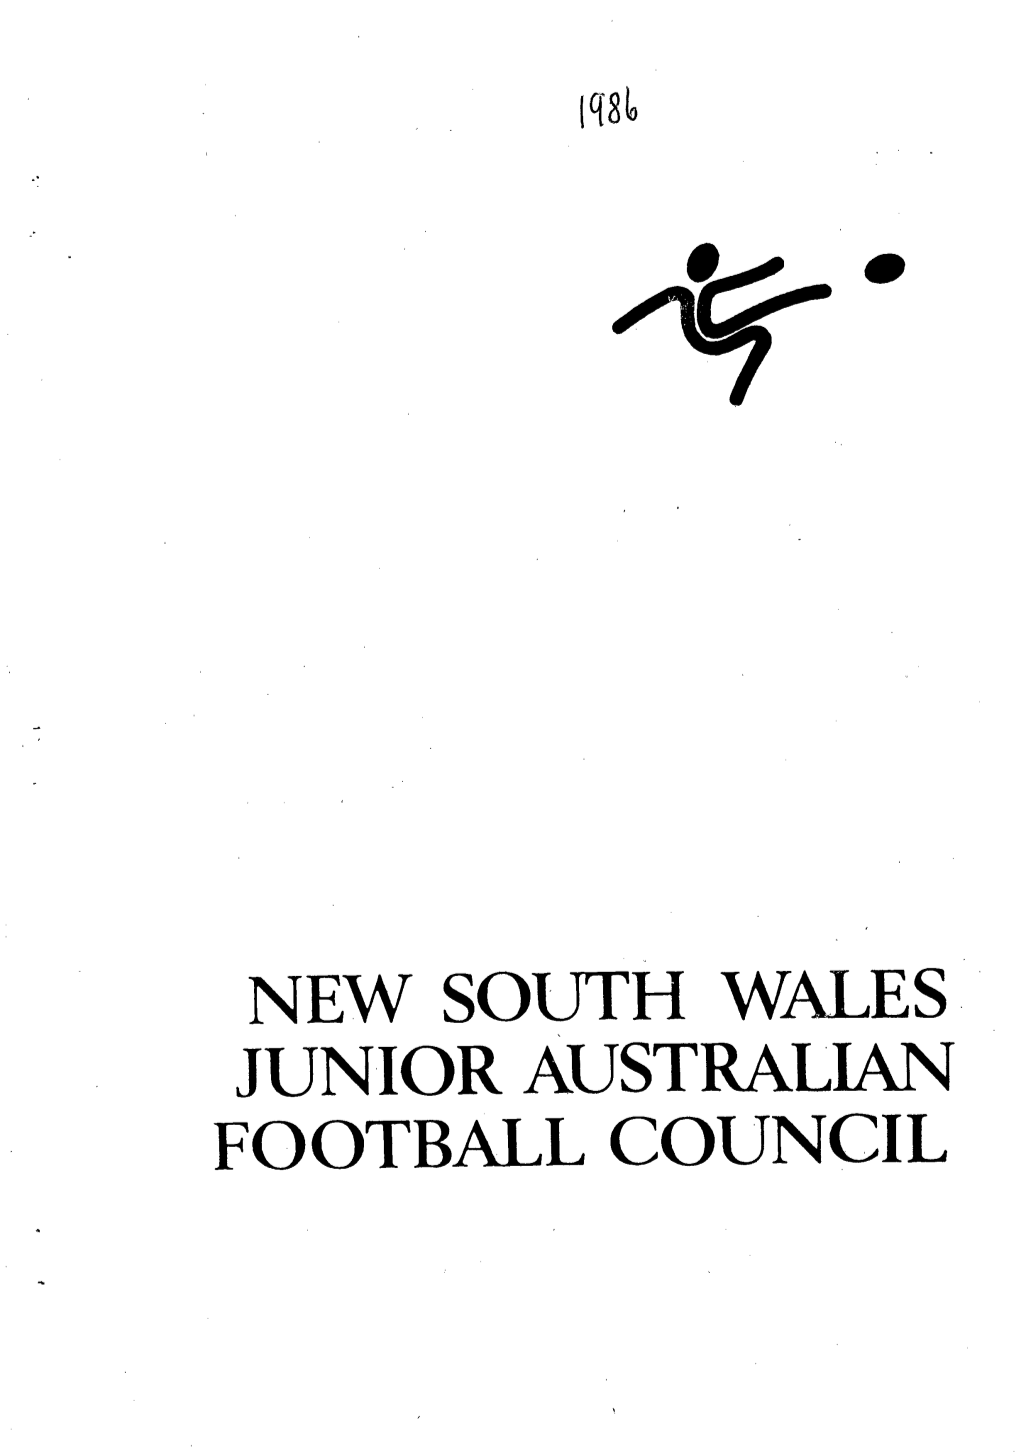 NSW Junior Australian Football Council Annual Report